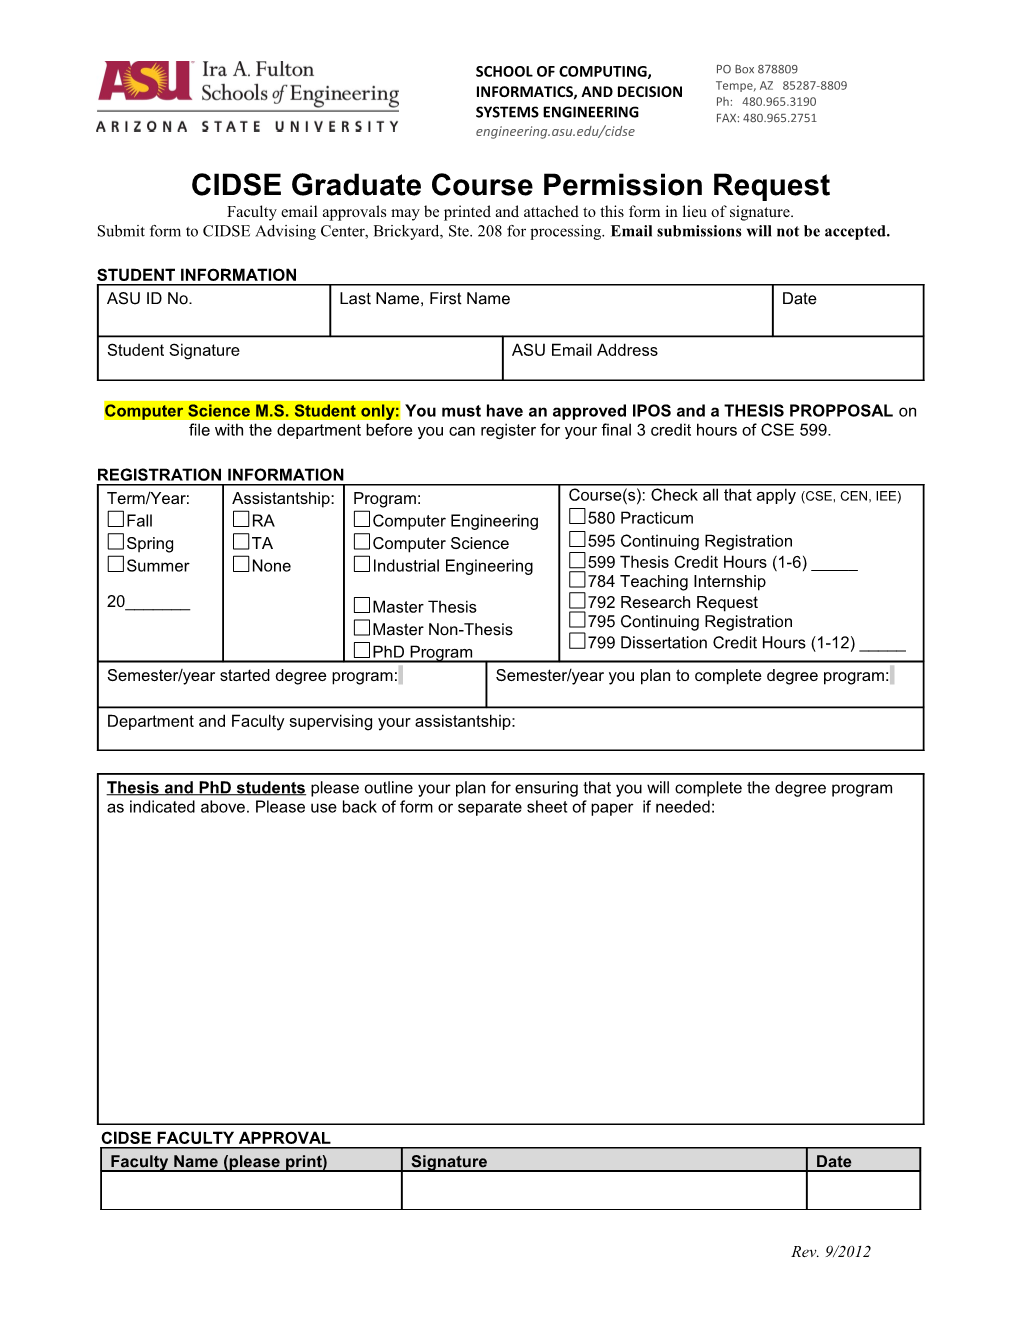 CIDSE Graduate Course Permission Request